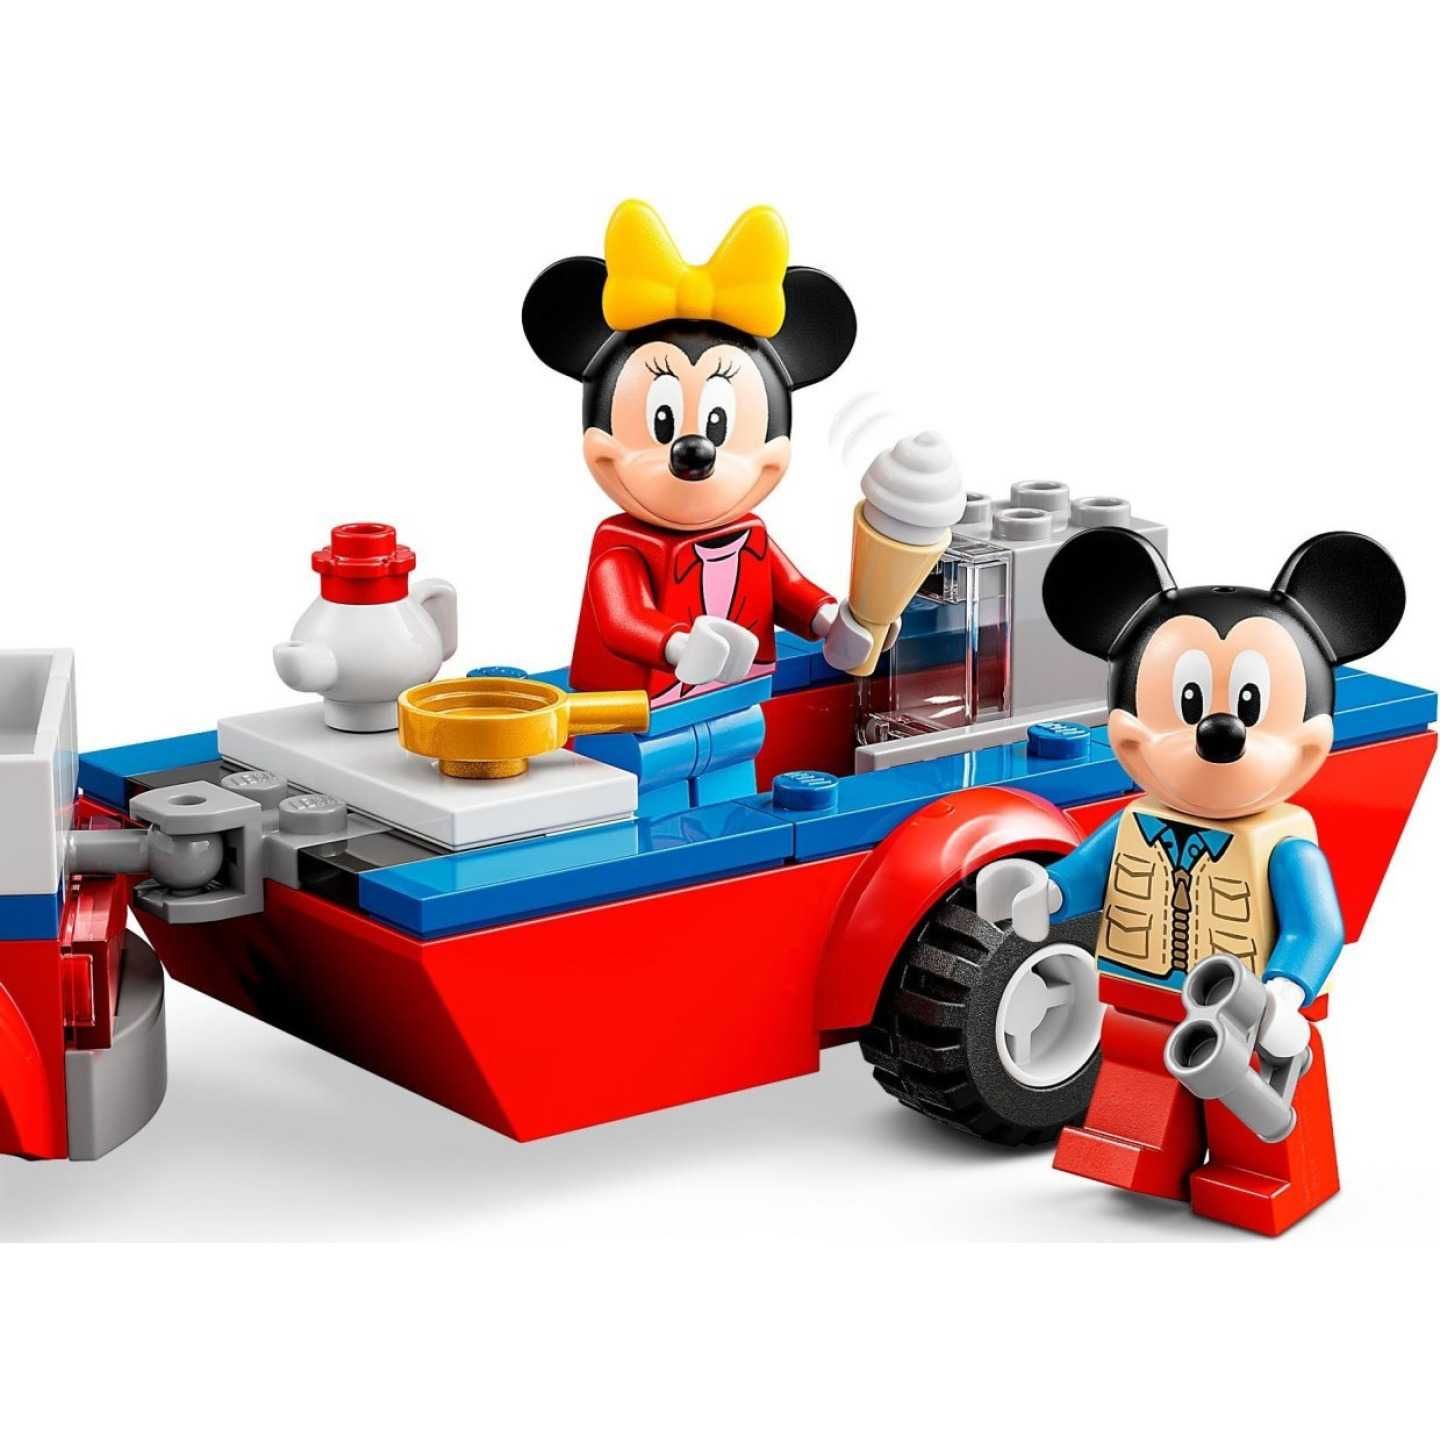 Lego Disney Mickey and Friends 10777 За городом. В наличии